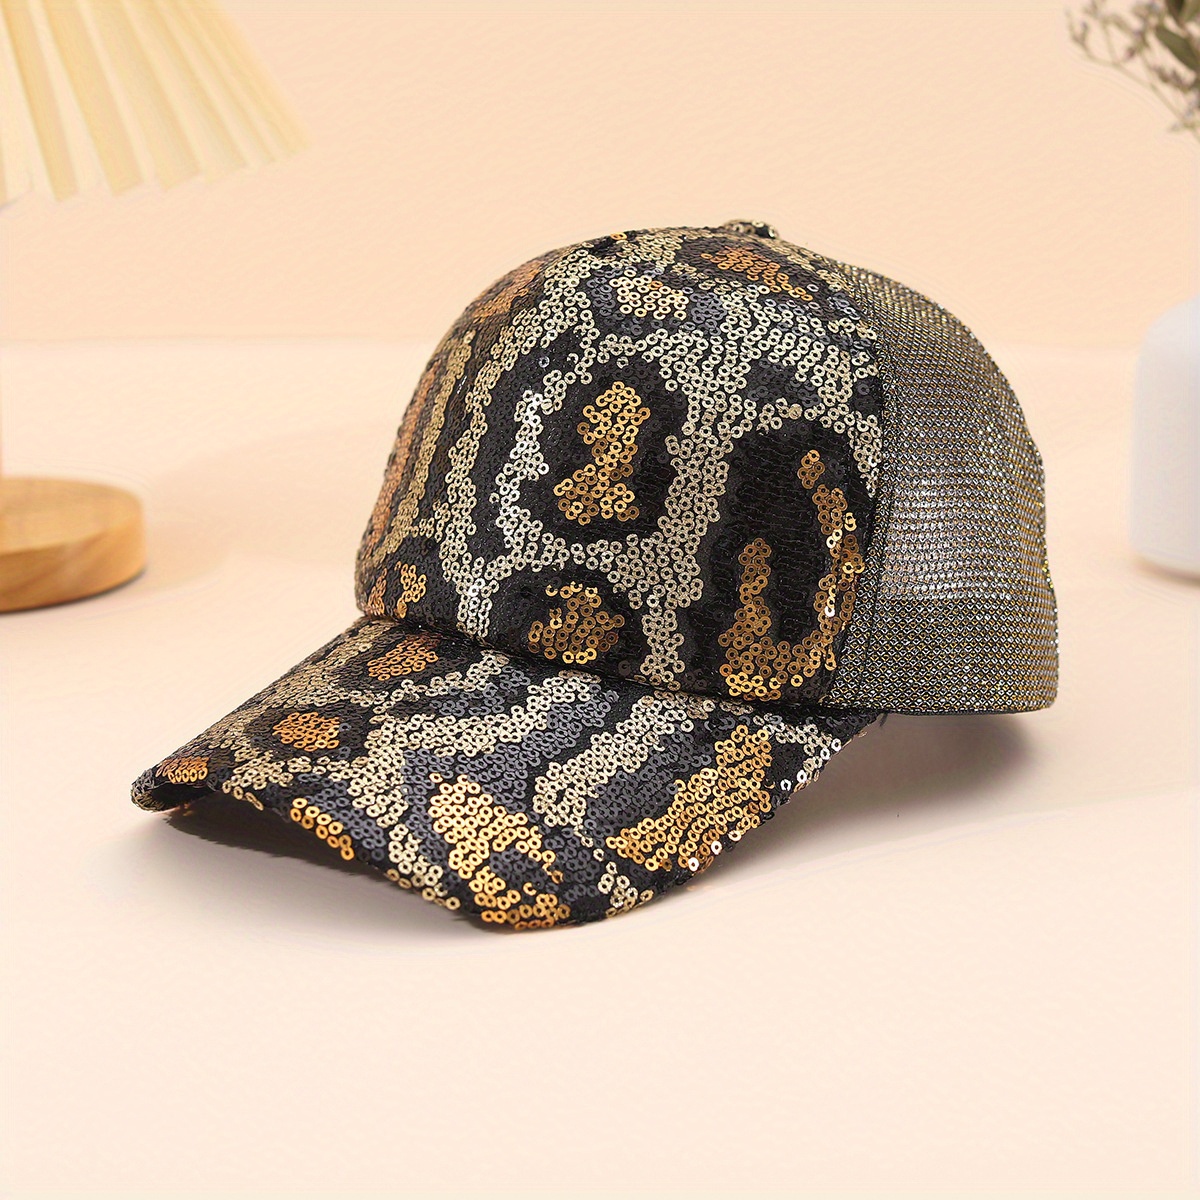 

Sequin Leopard Print Baseball Cap For Women, Sun Protection Adjustable Trucker Hat, Sparkly Summer Peaked Hats For Outdoor Activities